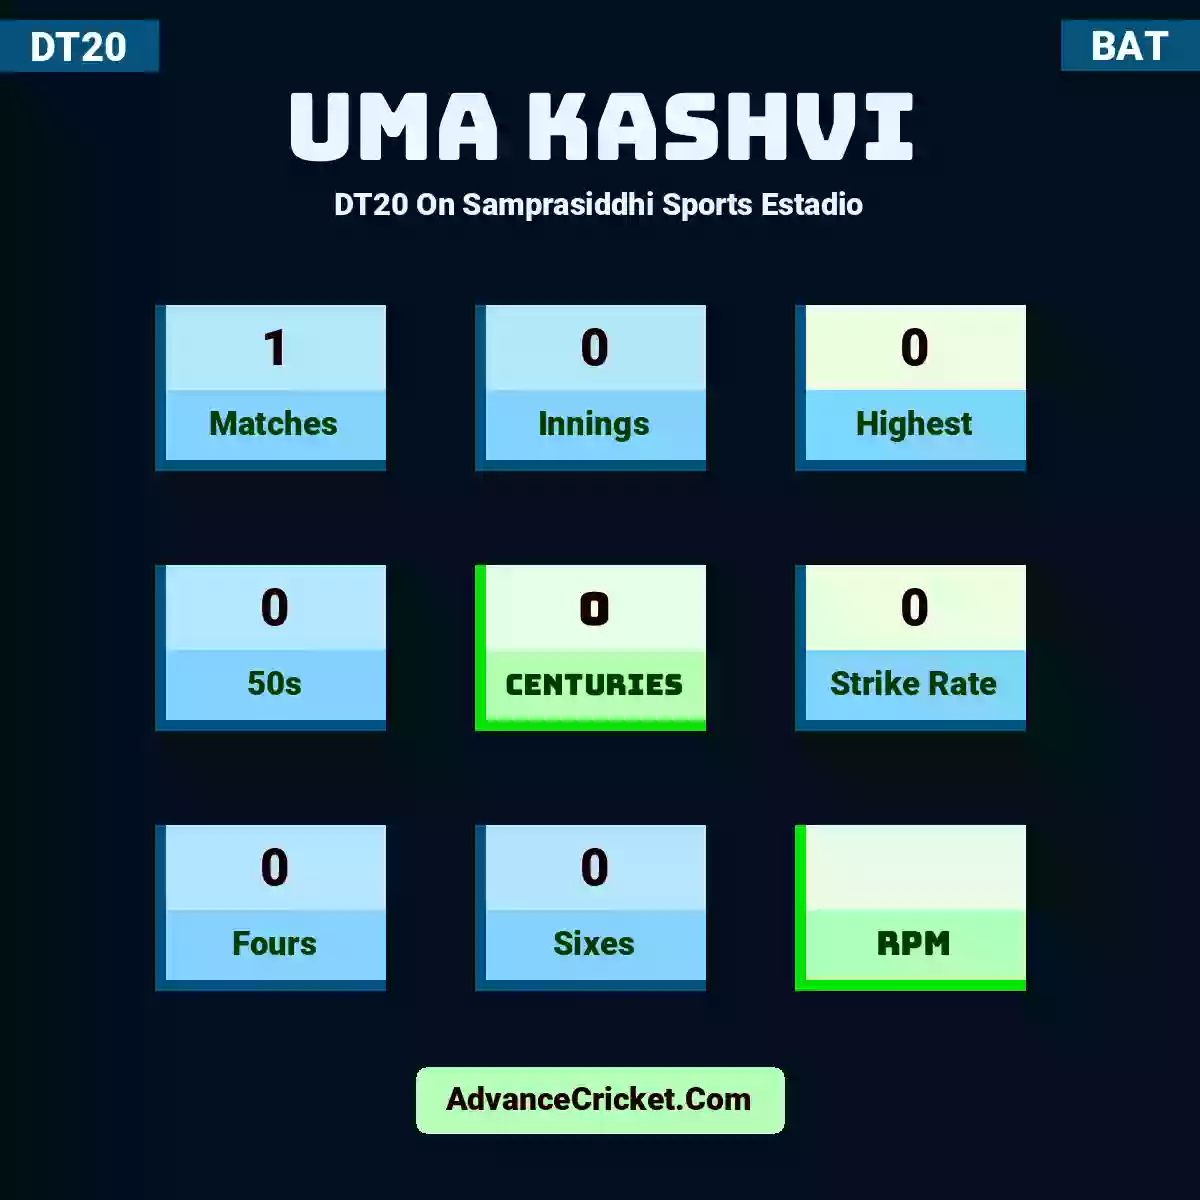 Uma Kashvi DT20  On Samprasiddhi Sports Estadio, Uma Kashvi played 1 matches, scored 0 runs as highest, 0 half-centuries, and 0 centuries, with a strike rate of 0. U.Kashvi hit 0 fours and 0 sixes.